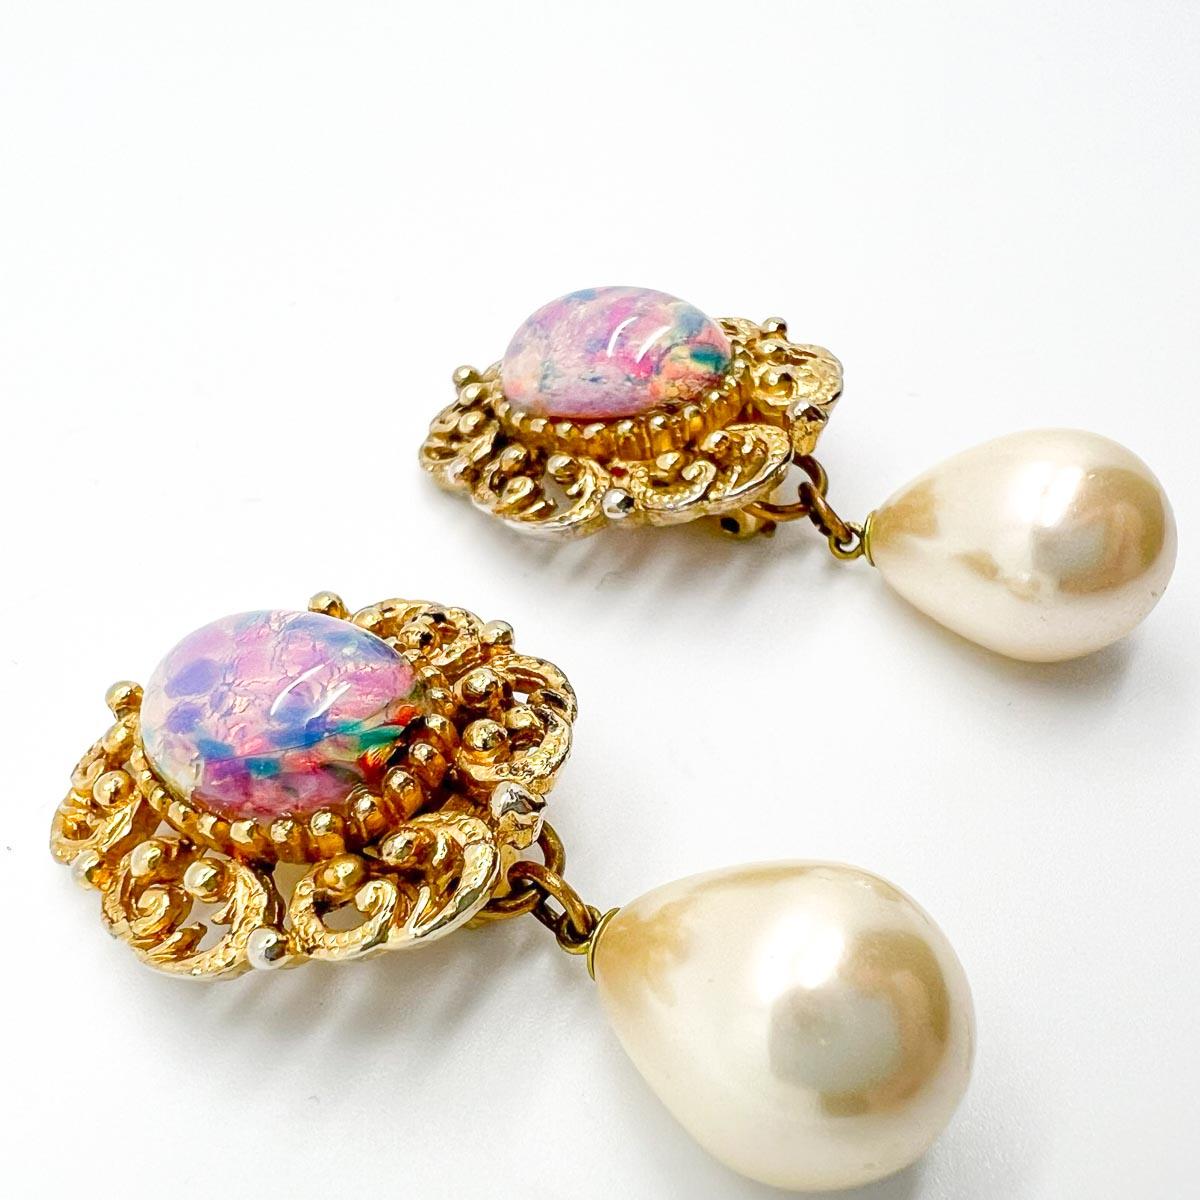 1960s women's jewelry